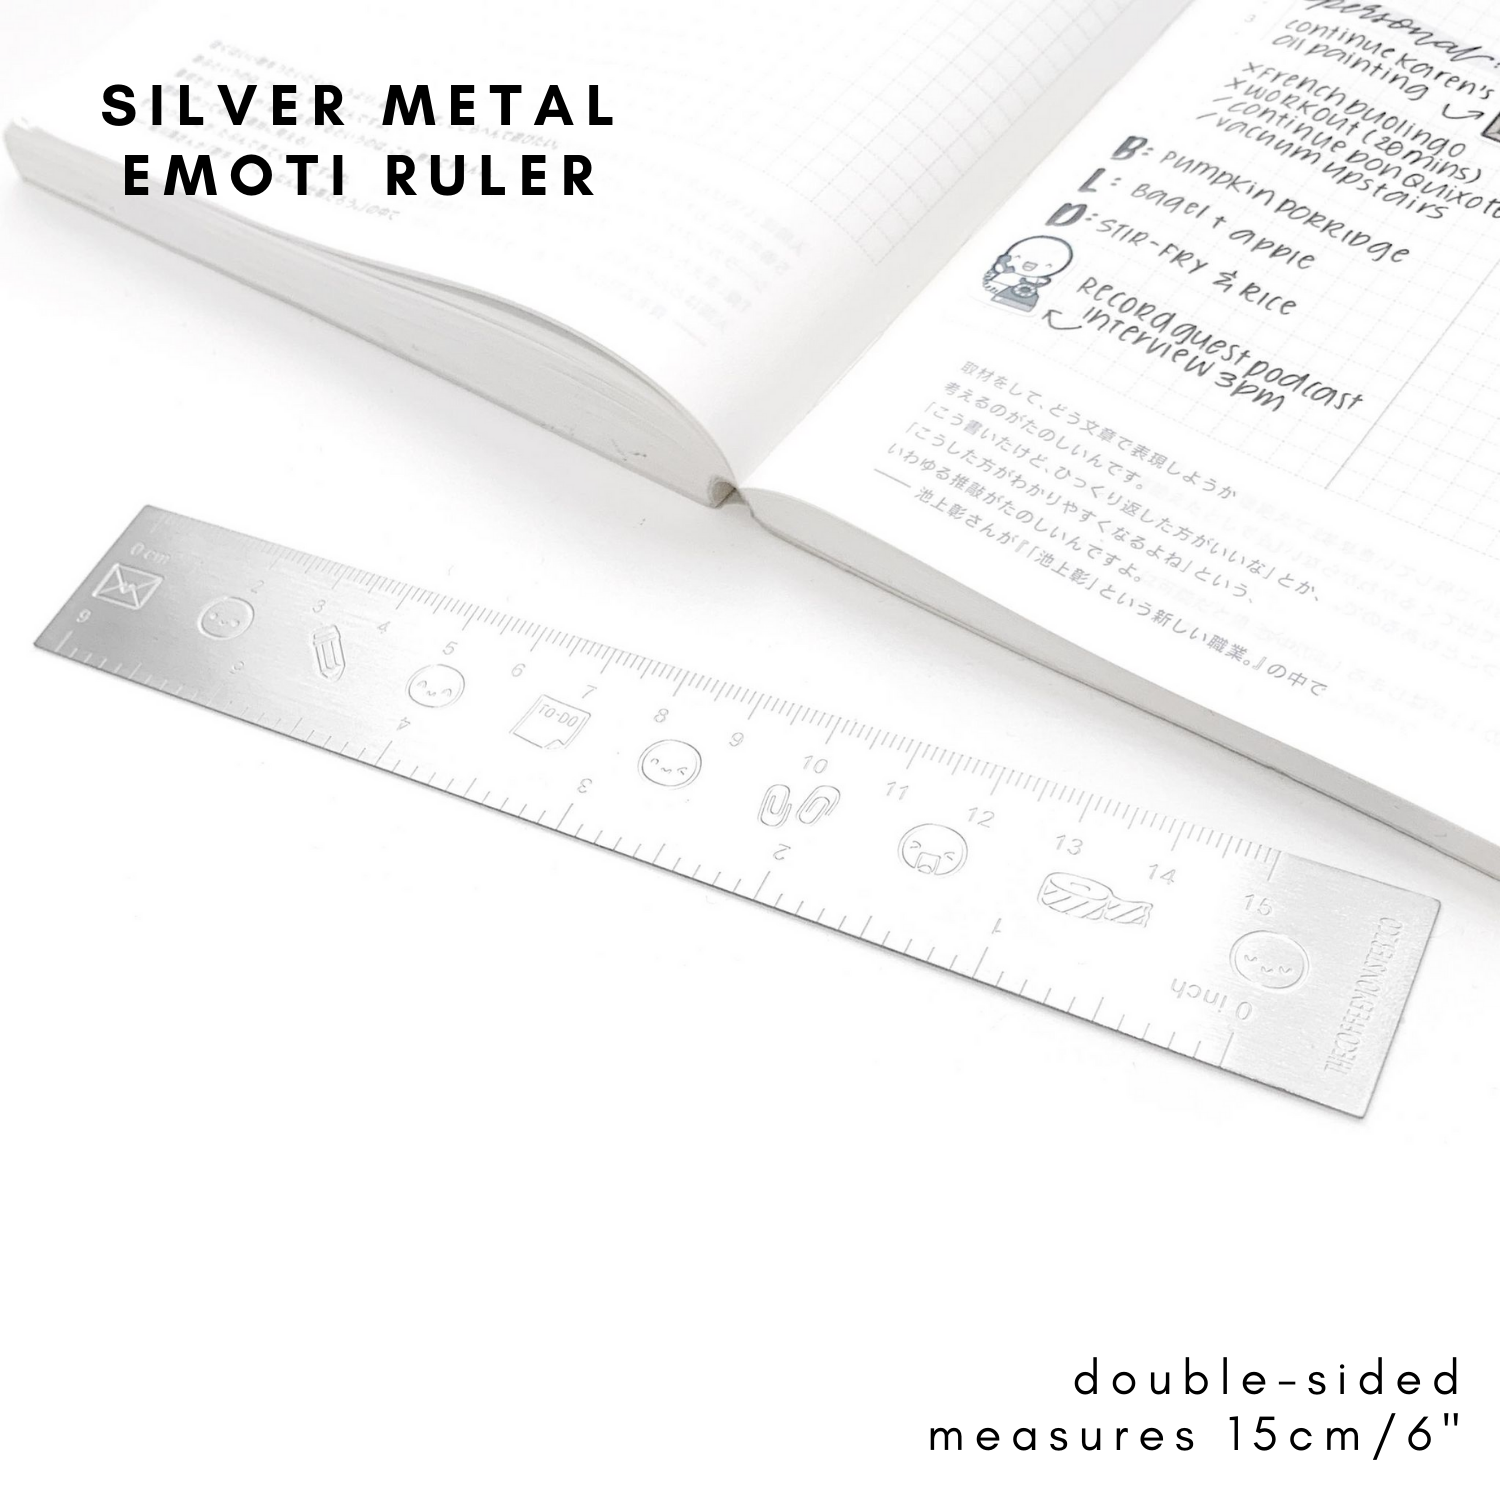 Silver Metal Emoti Ruler